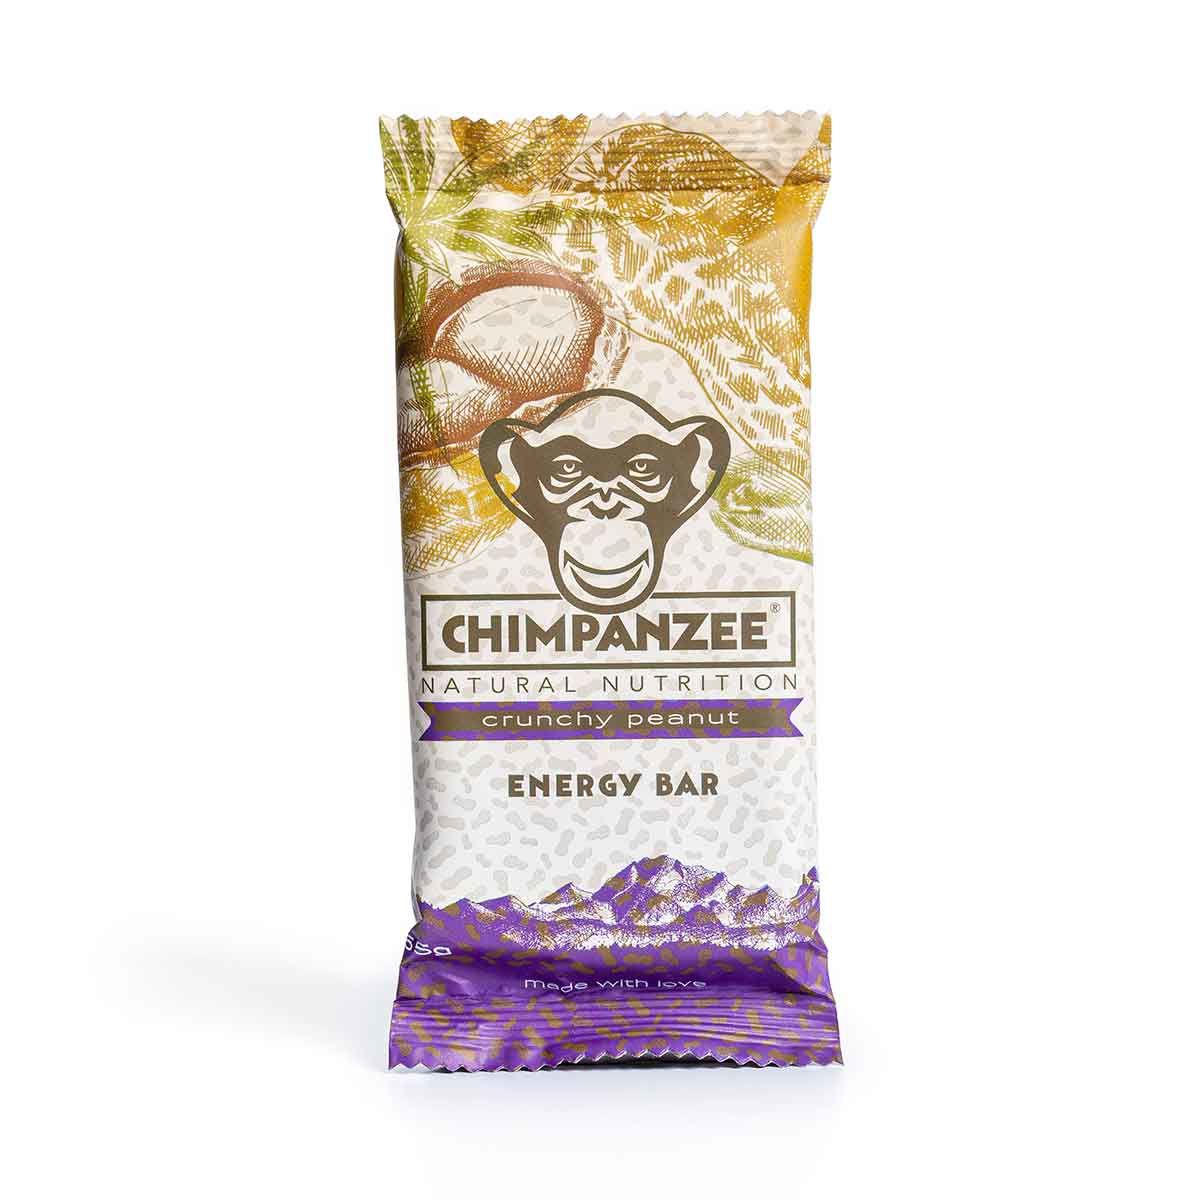 Chimpanzee energy bar - Crunchy peanut